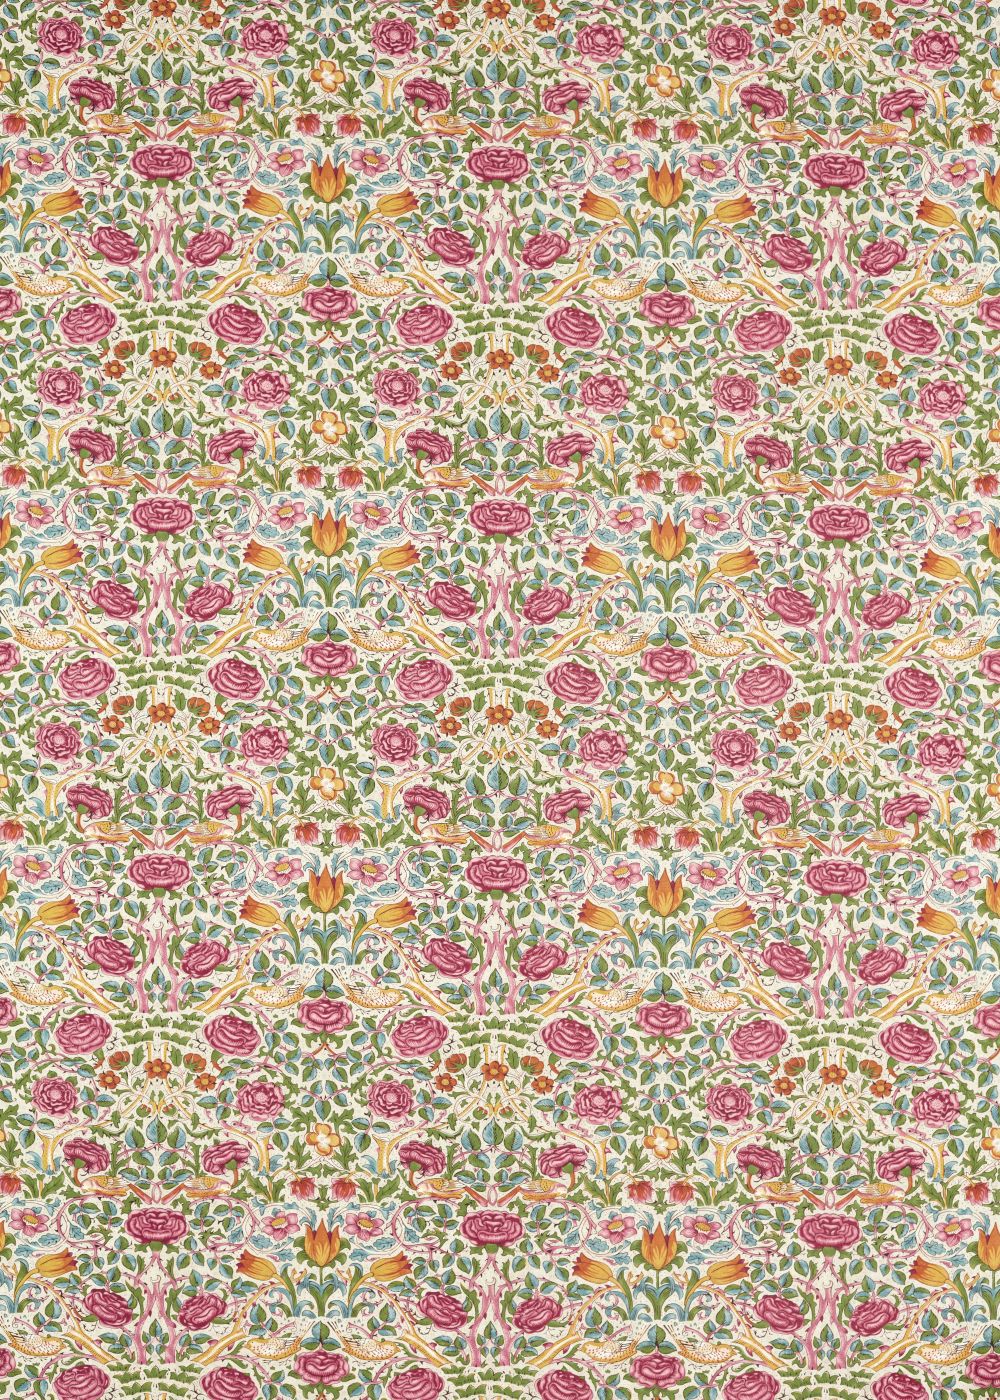 Rose Fabric - Boughs Green / Rose - by Morris